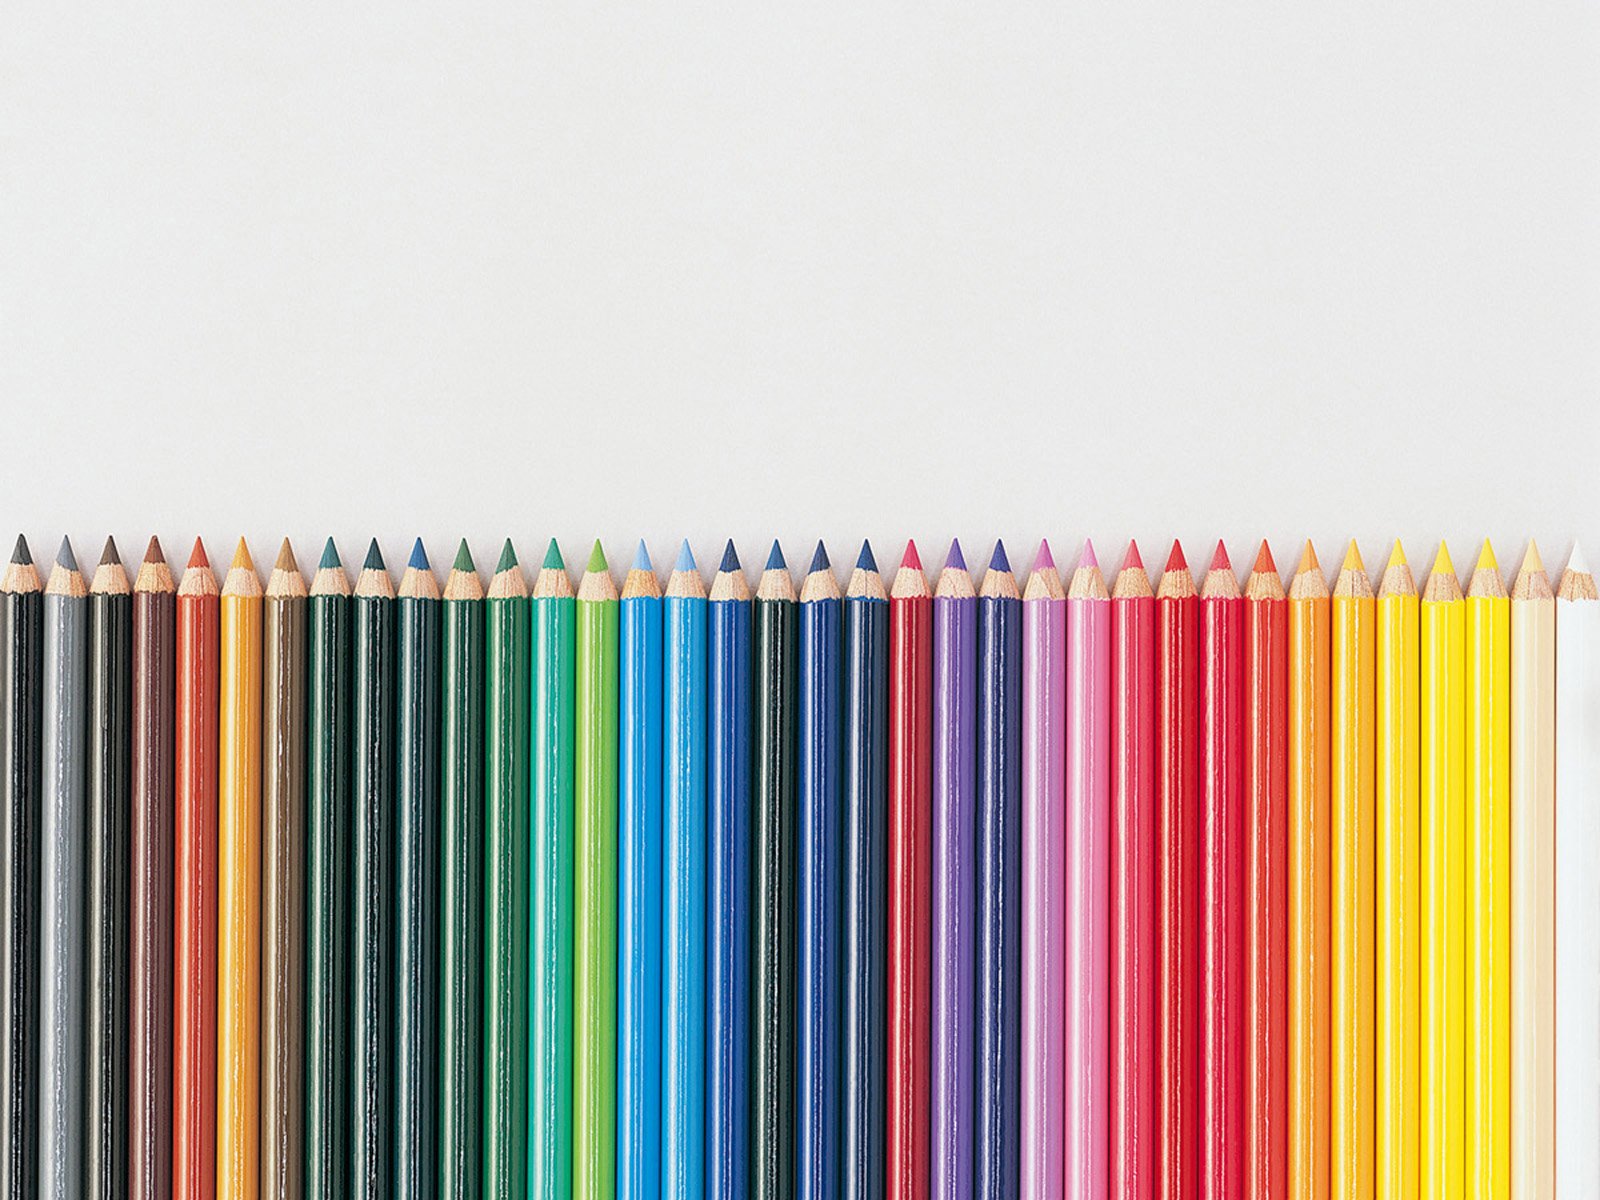 Карандаши цветные задания. Карандаши колор пенсил. Карандаши цветные. Цветные карандаши на белом фоне. Цветные карандаши в ряд.